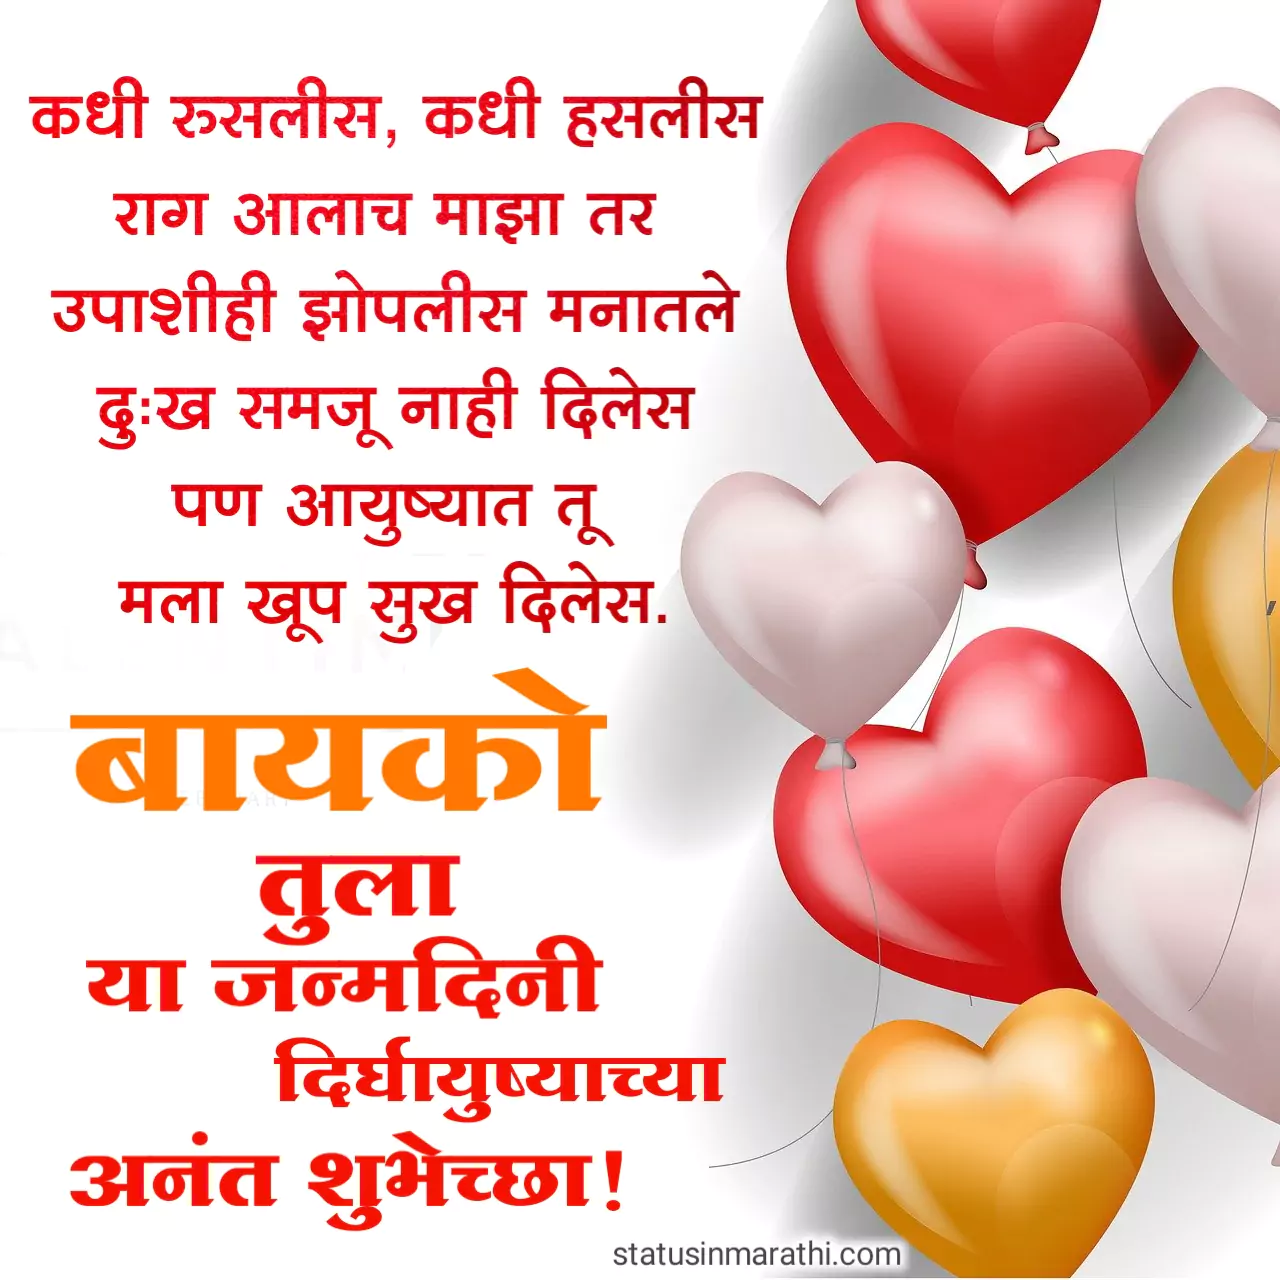 Happy Birthday wishes for wife in marathi